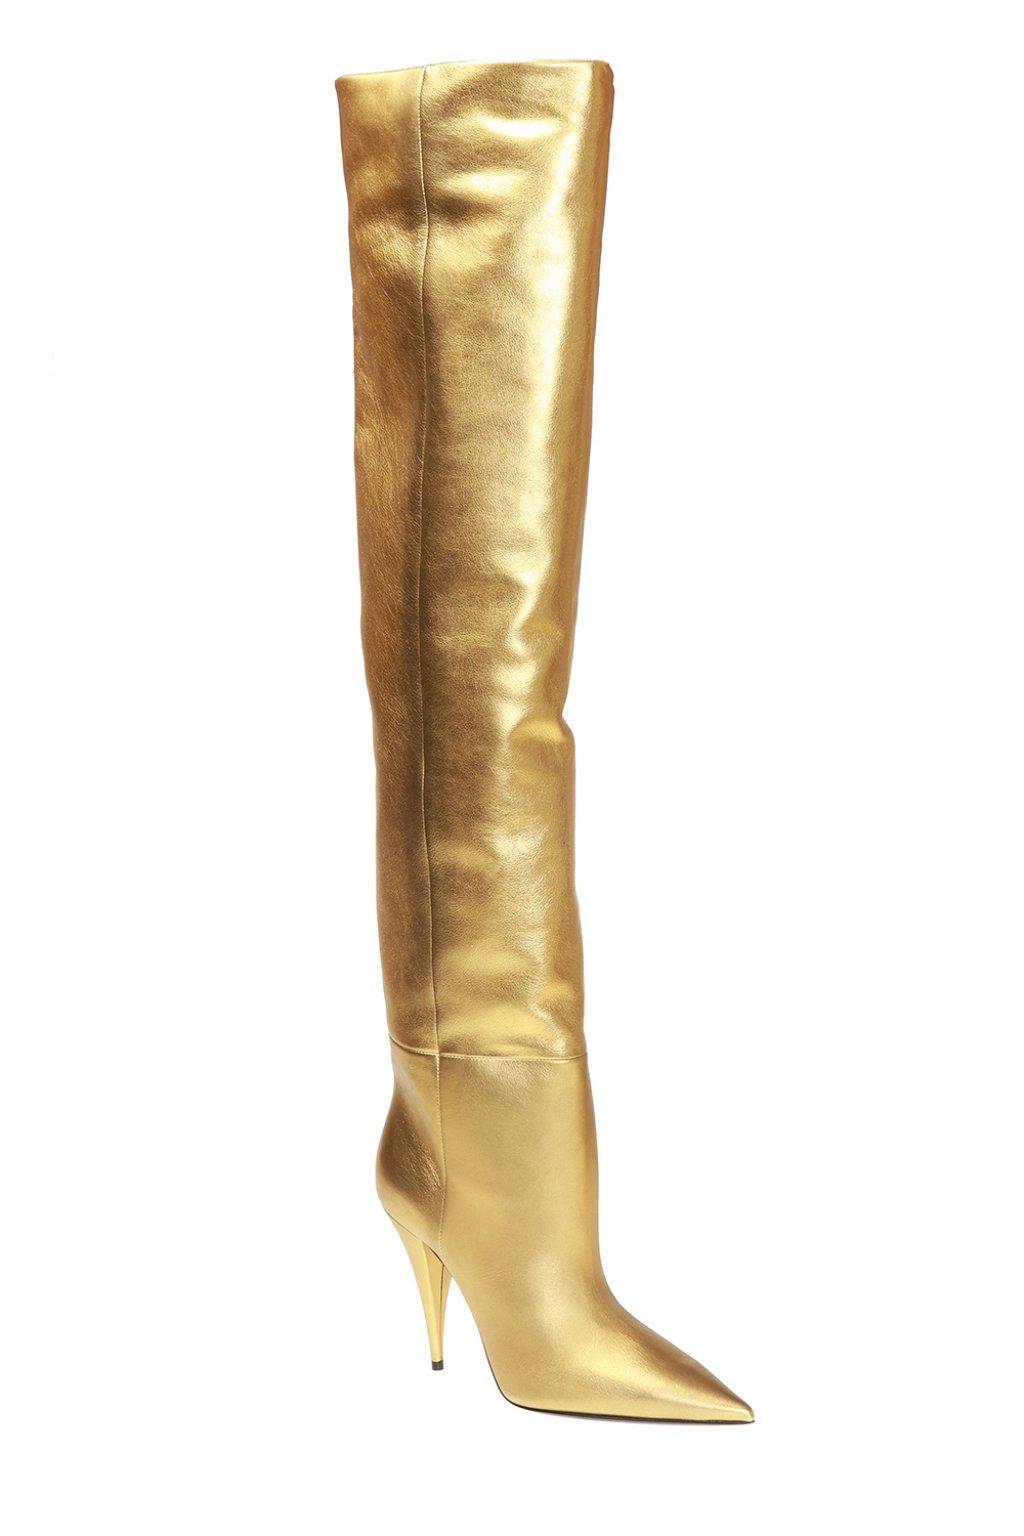 Saint Laurent 'kiki' Leather Boots Gold in Metallic | Lyst